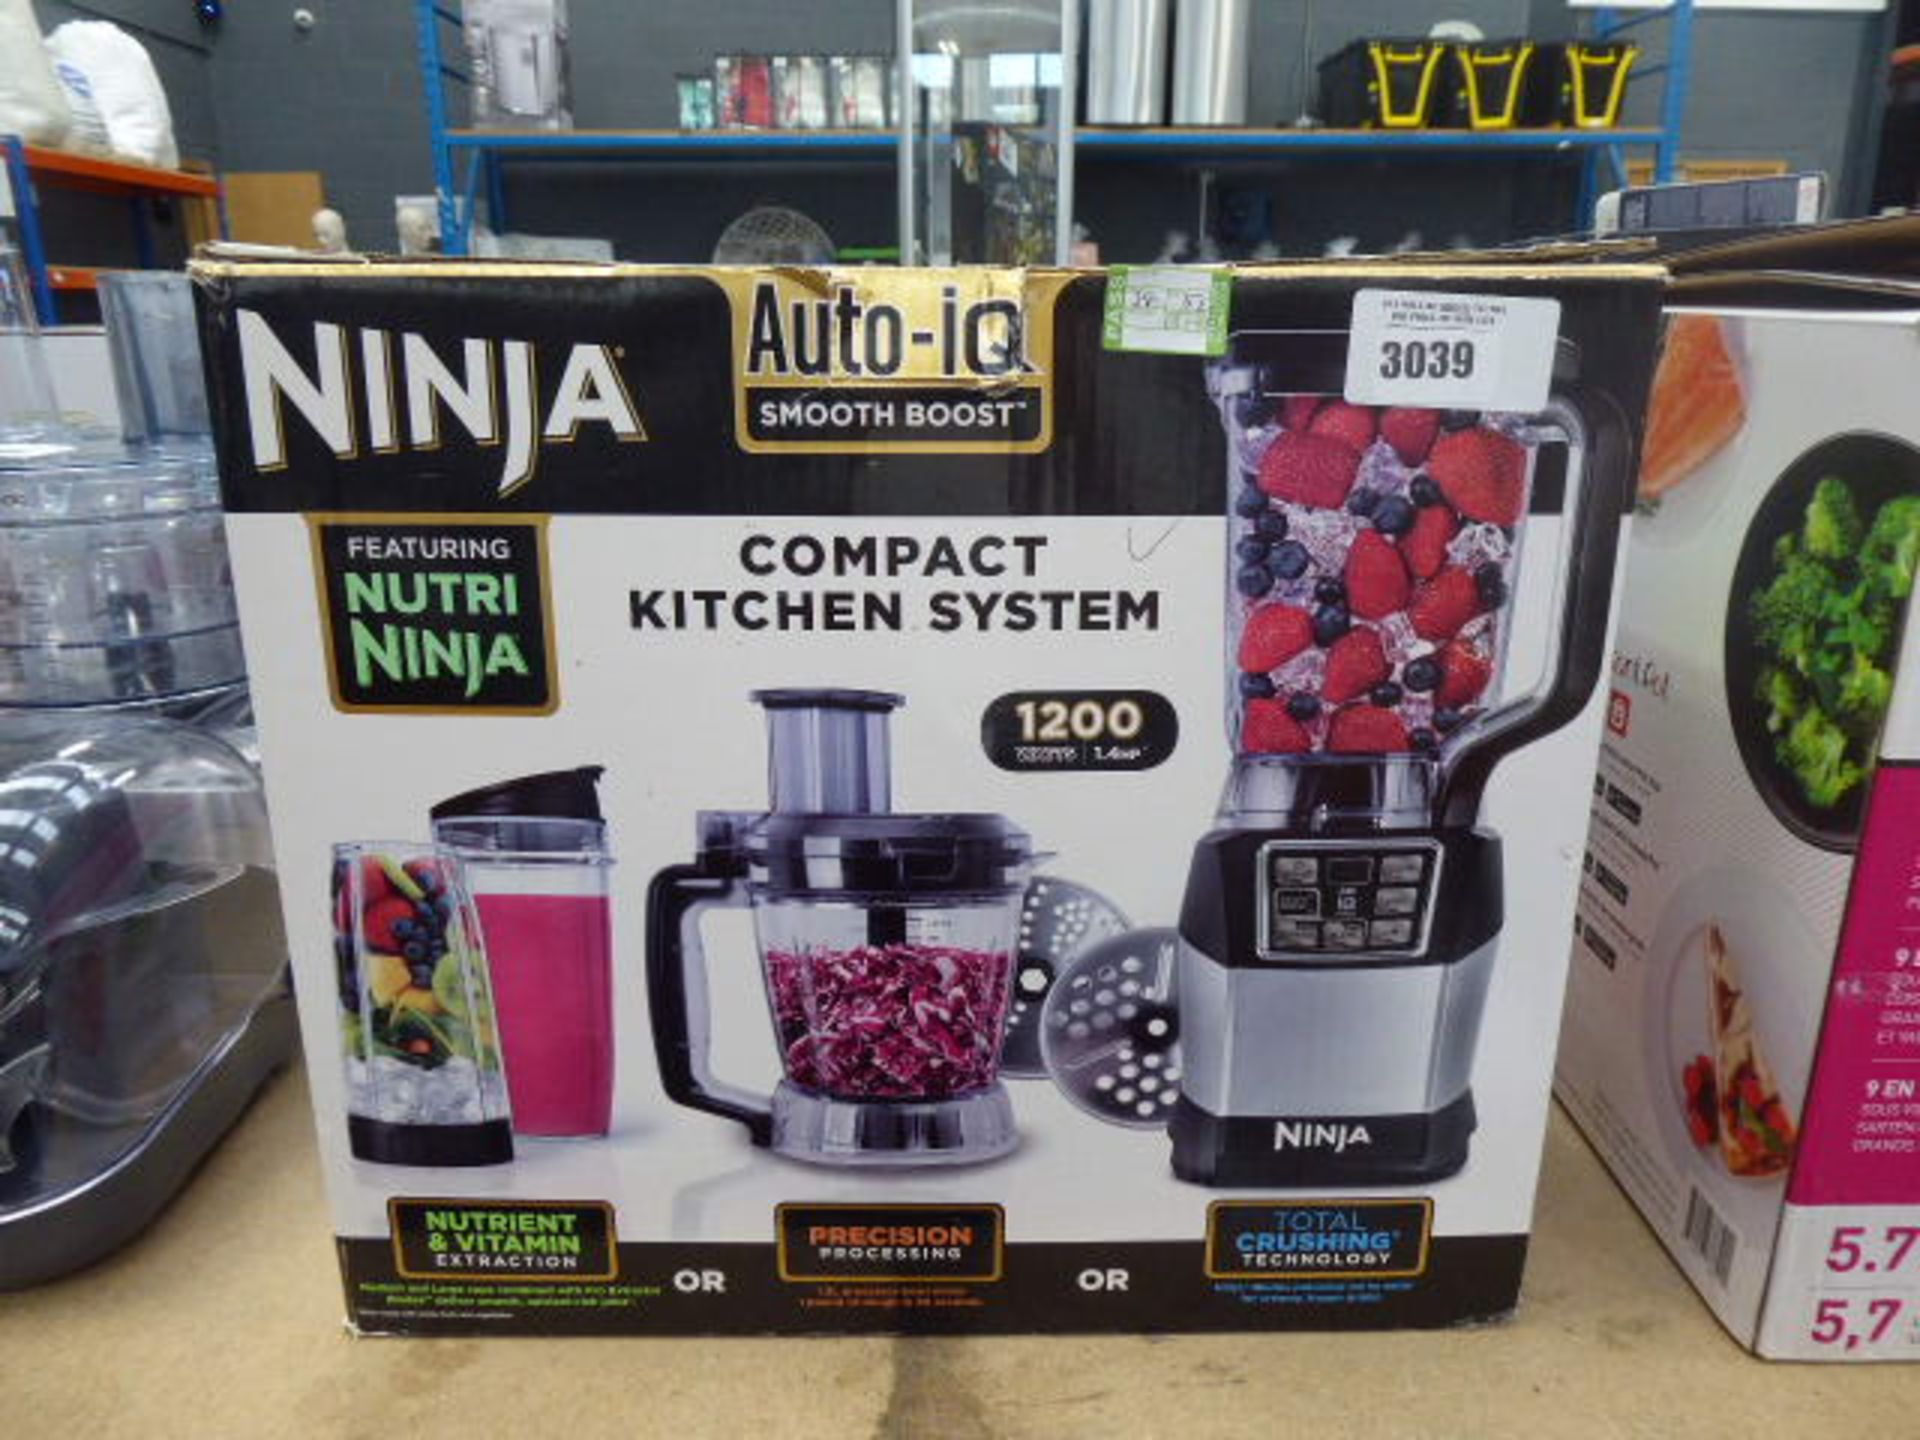 Ninja compact kitchen system